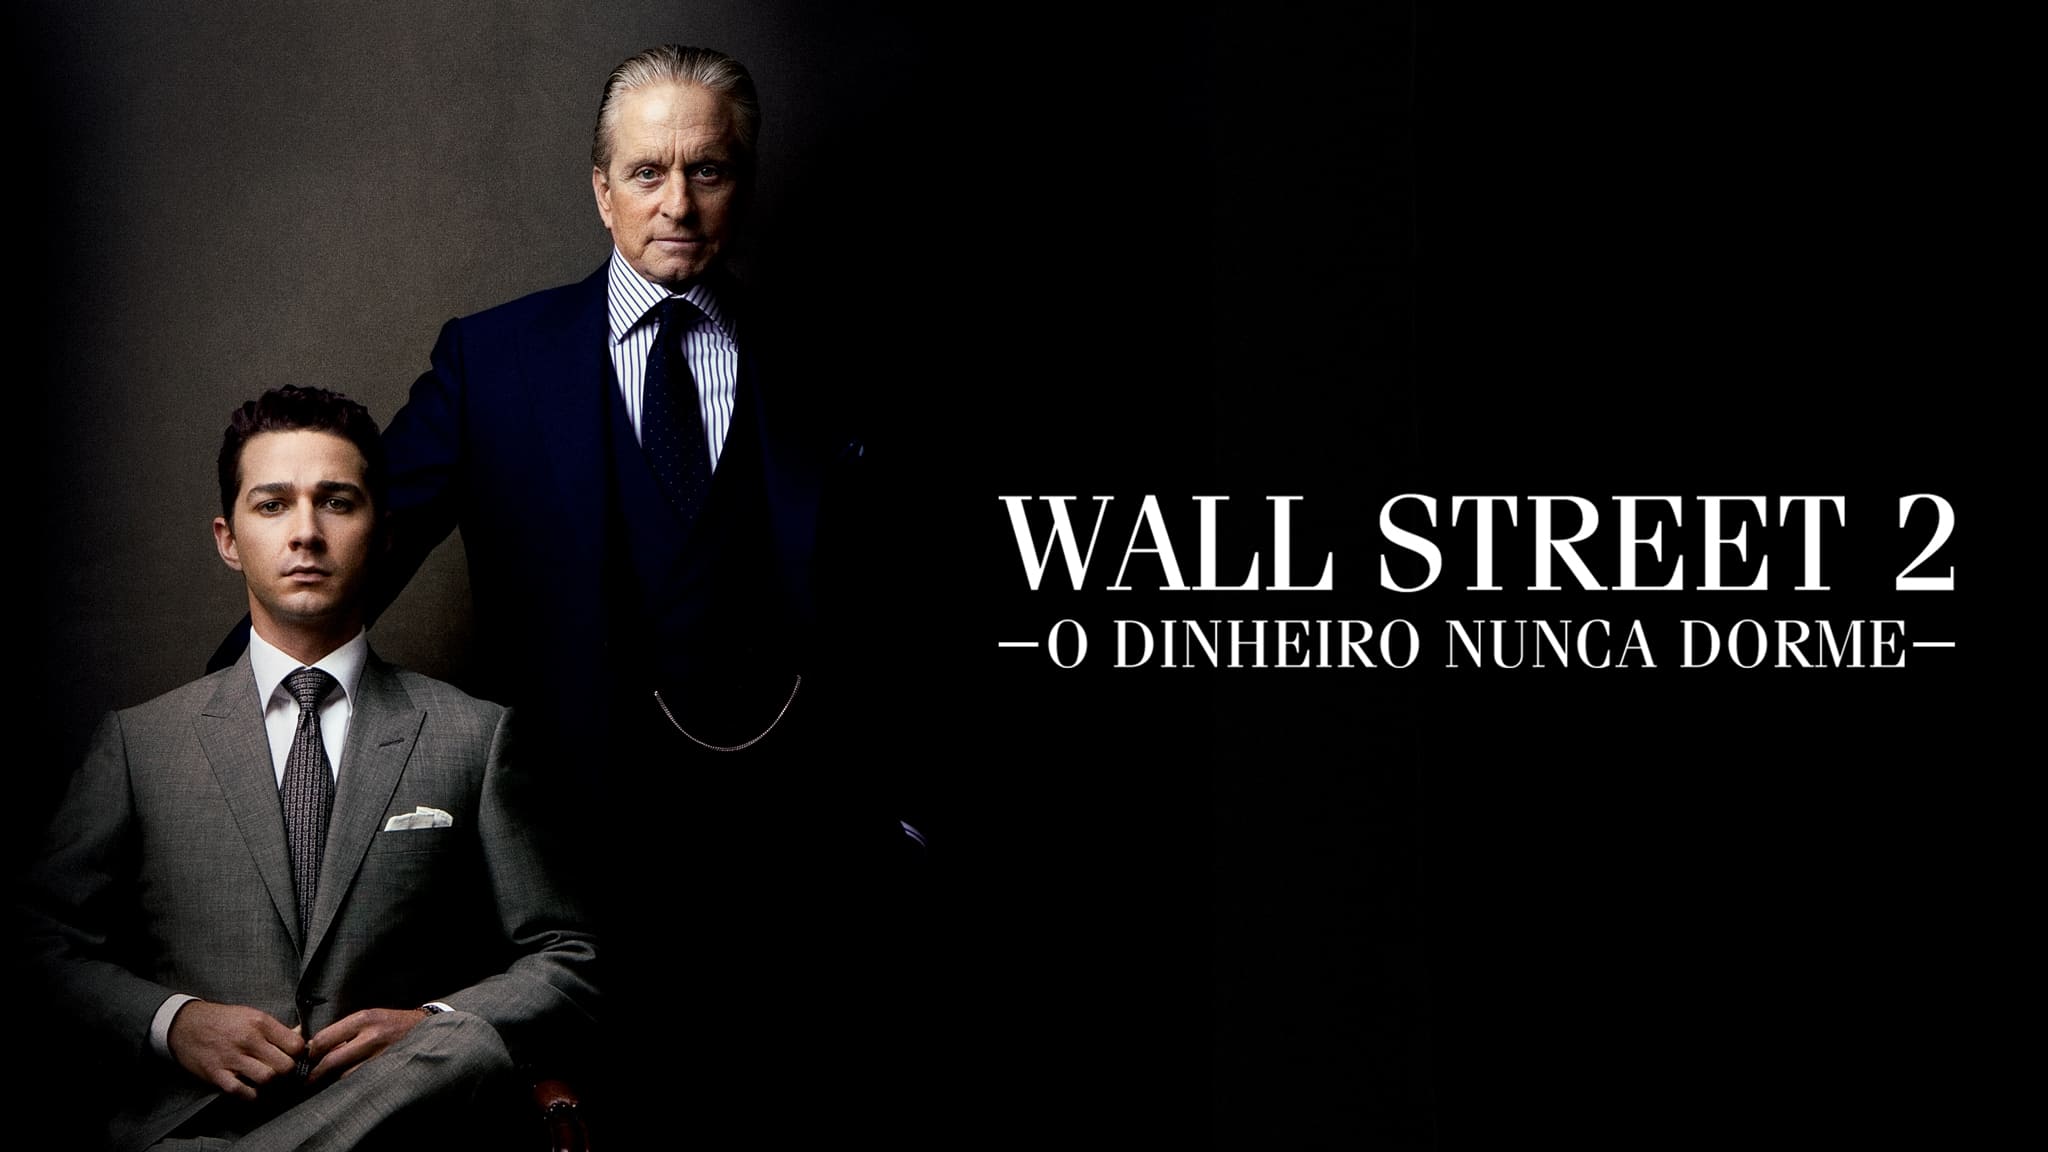 Wall Street Money Never Sleeps - Trailer #2 HD.